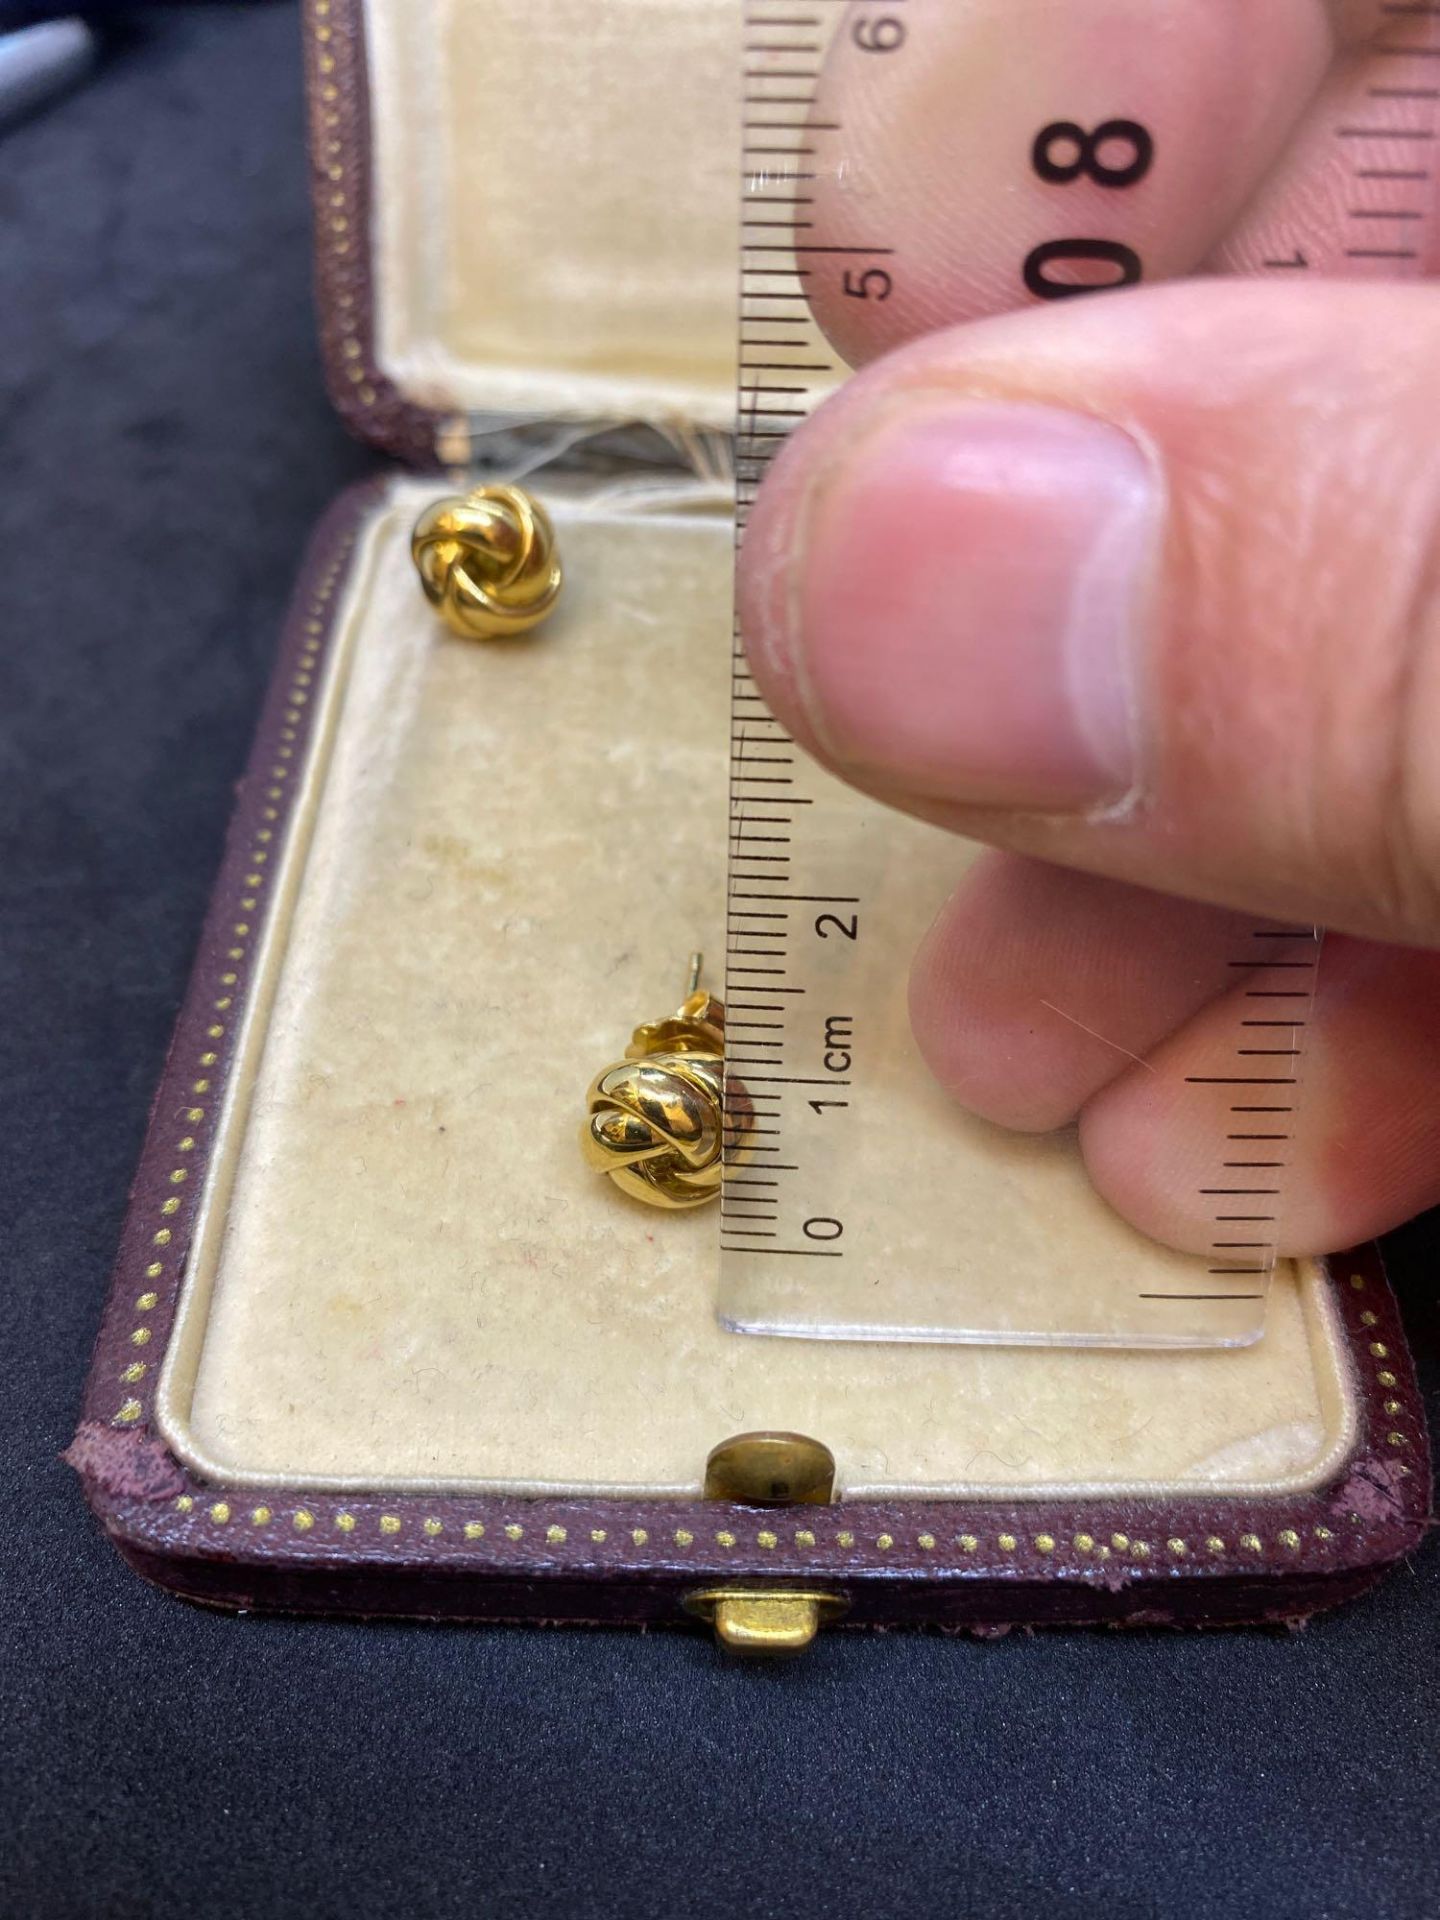 18ct Gold Knott Stud Earrings - 7 Grams - Image 3 of 3